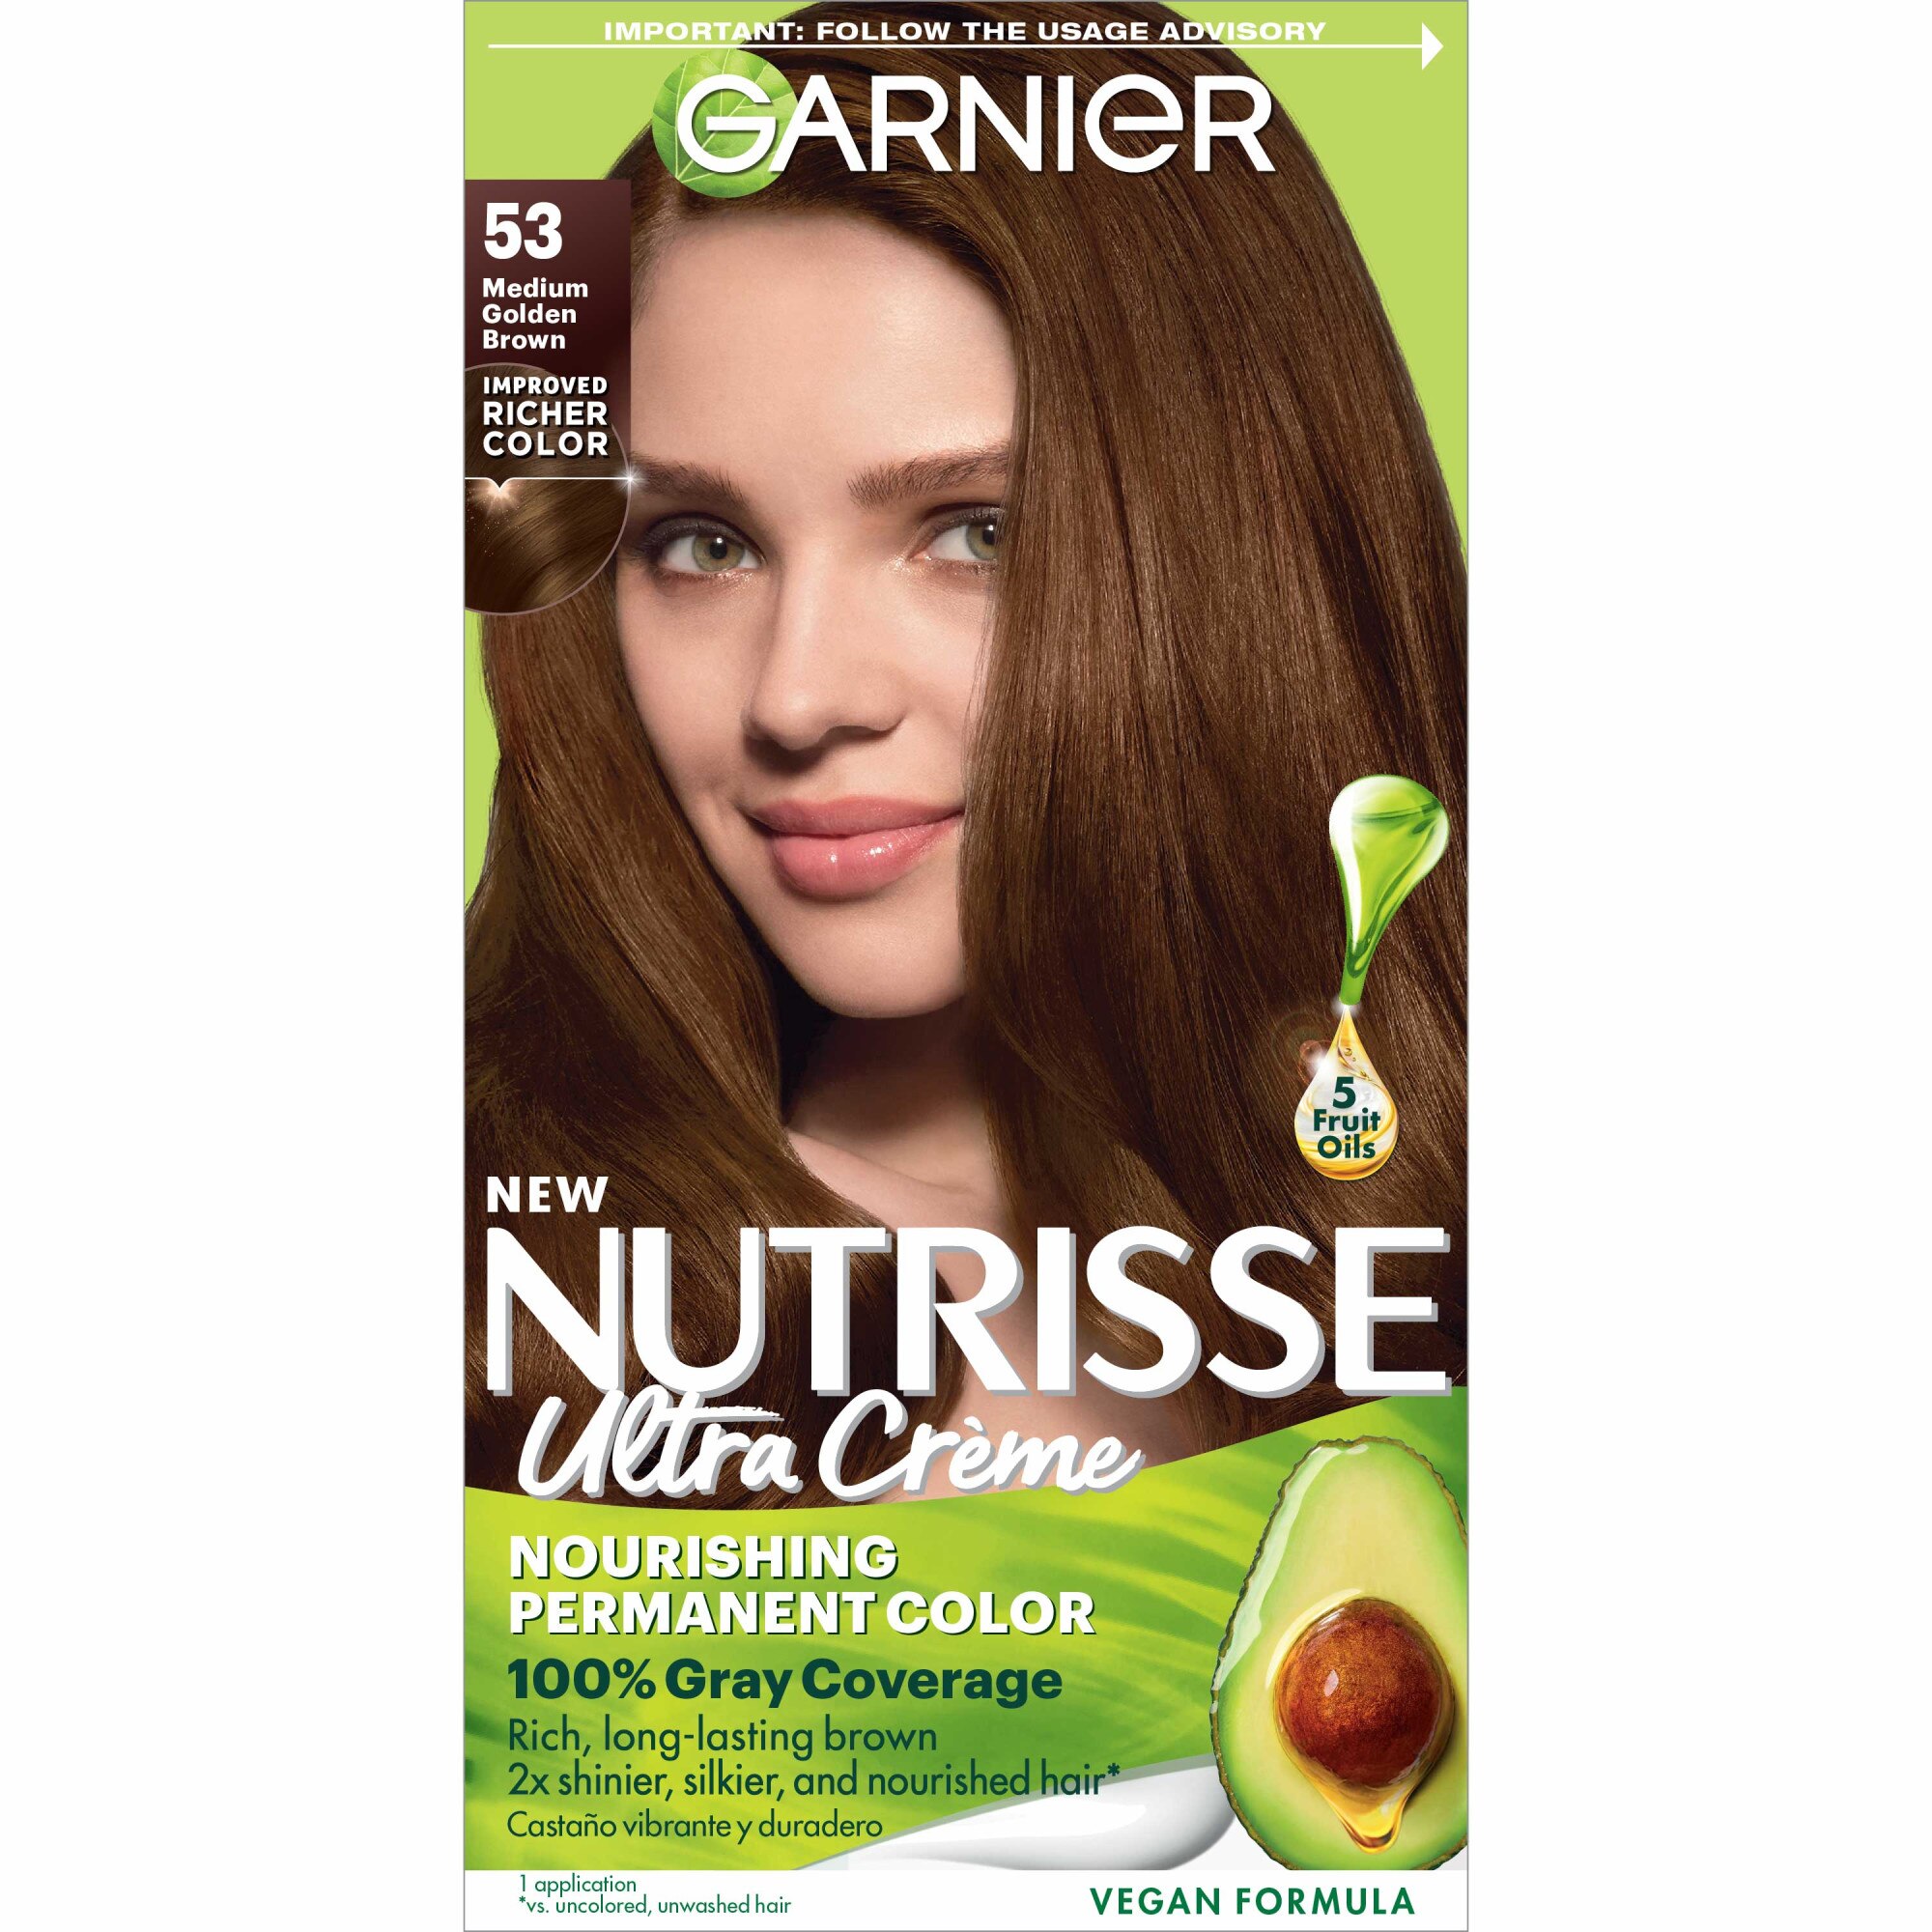 Garnier Nutrisse Nourishing Permanent Hair Color Creme, 53 Medium Golden Brown , CVS